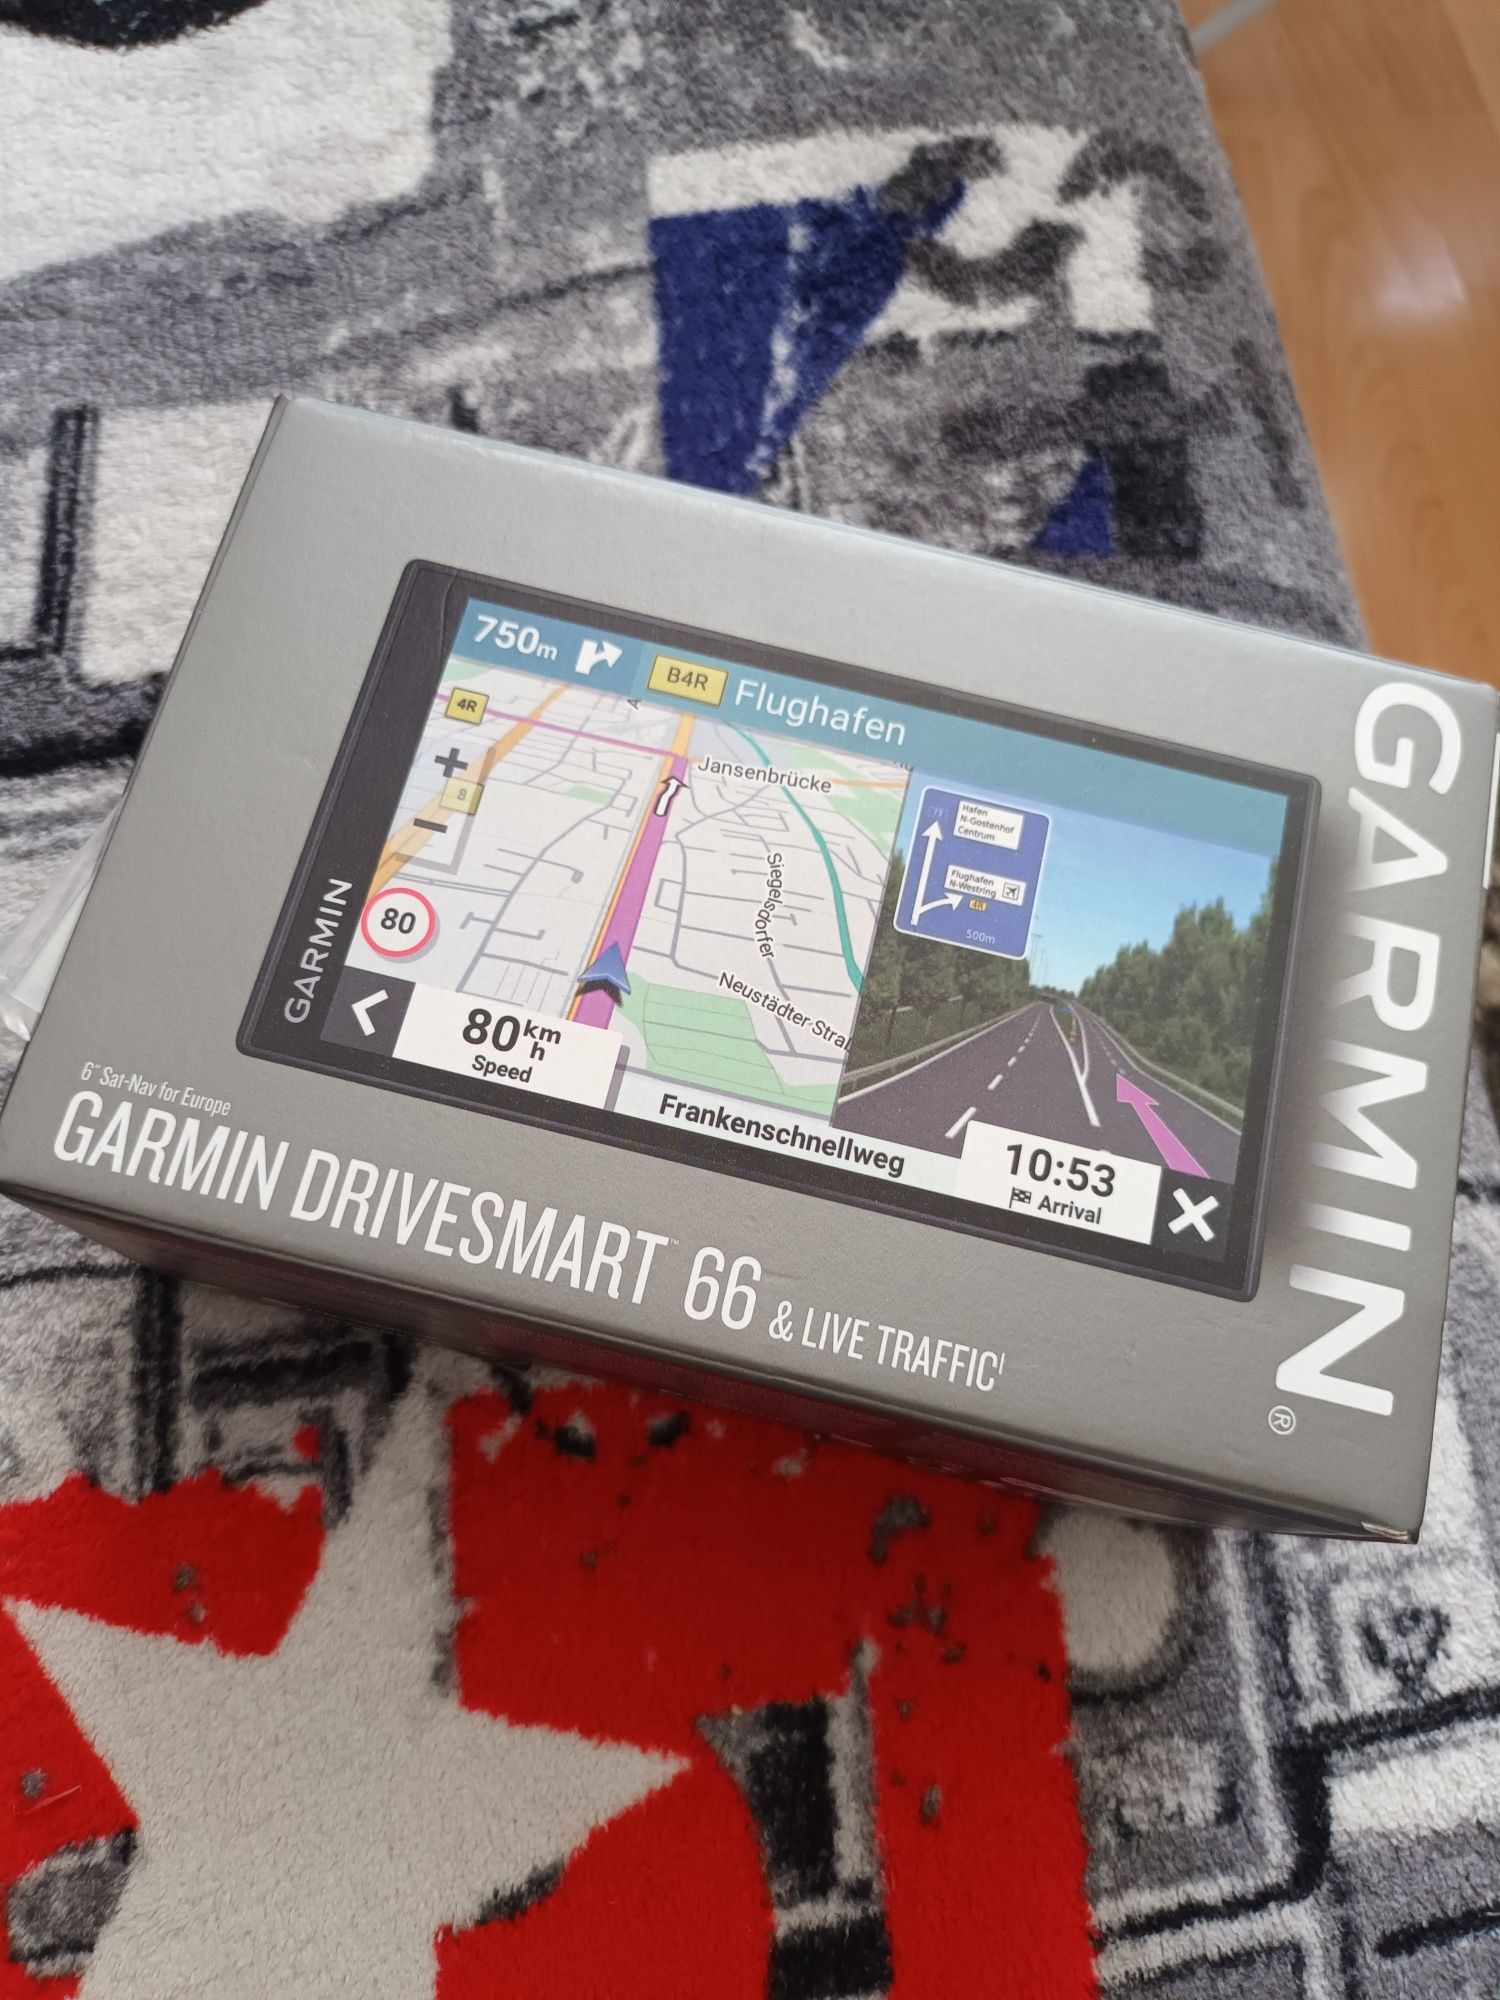 Nawigacja Garmin Drivesmart 66 & life traffic